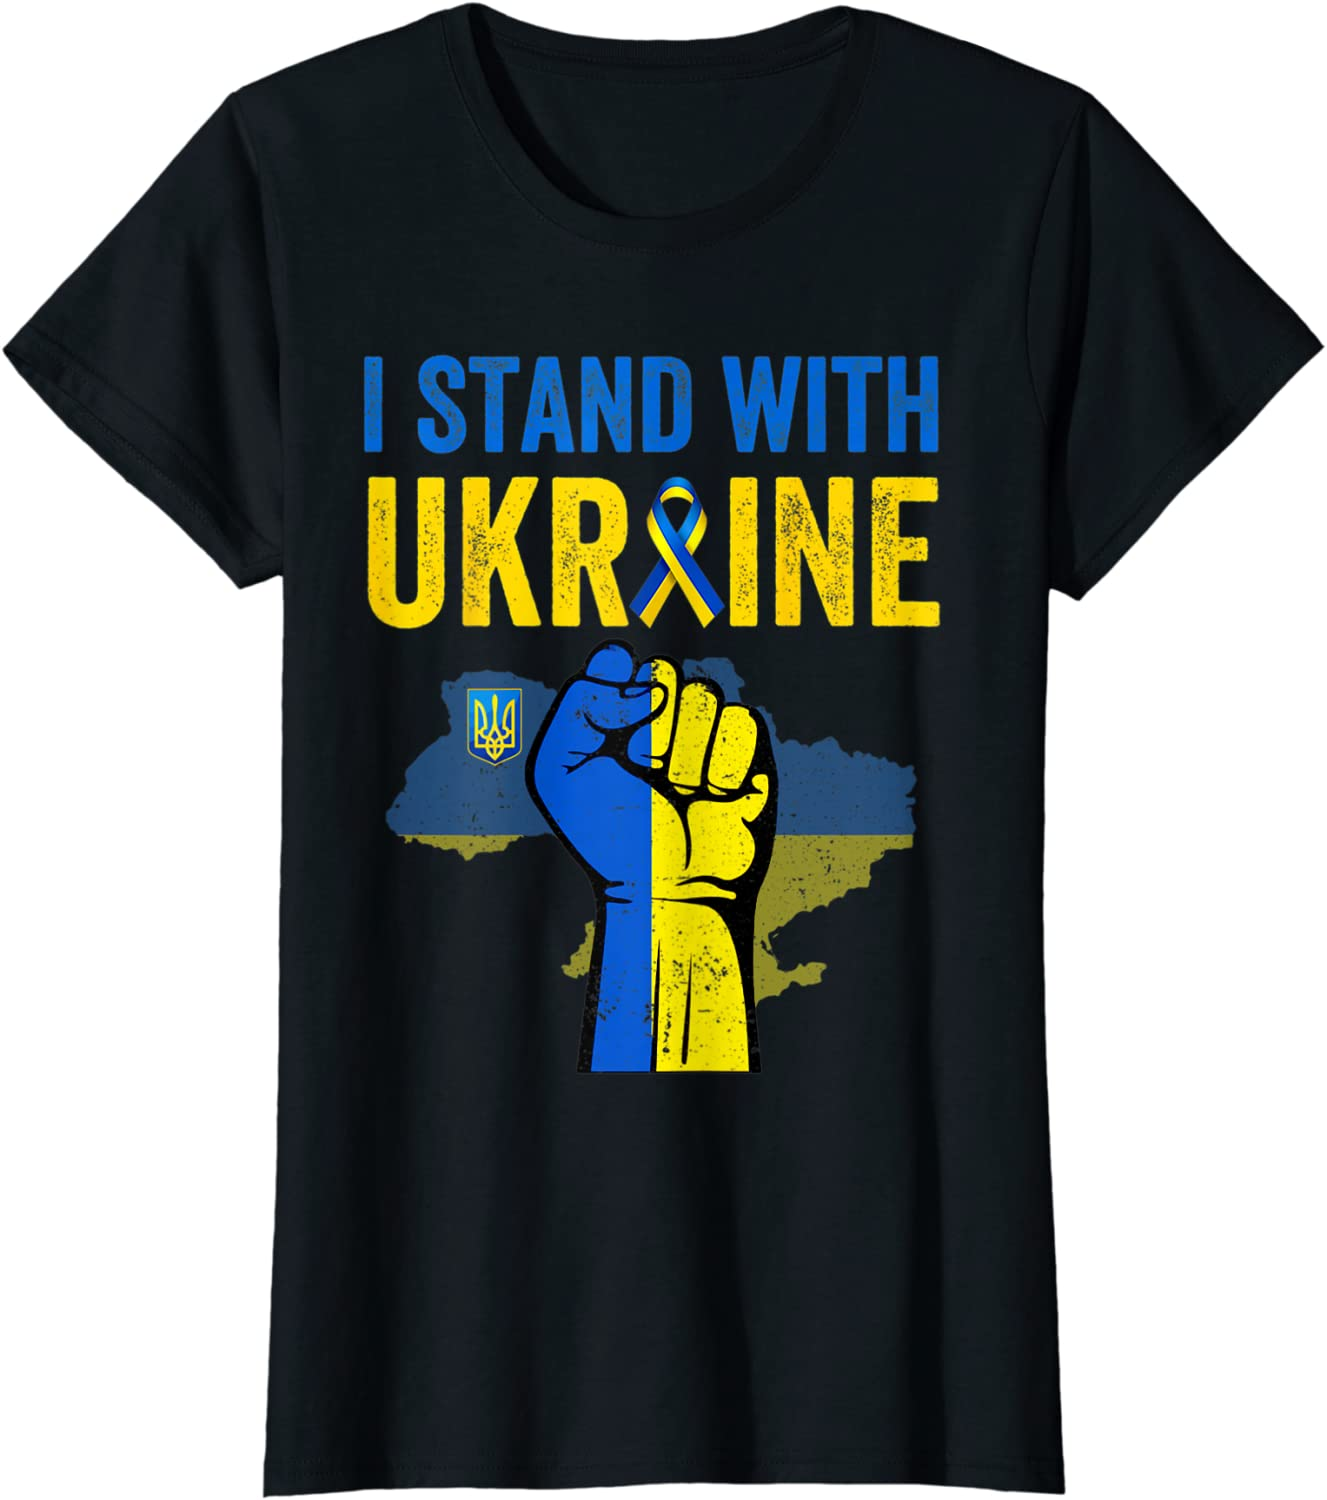 Support Ukraine - I Stand With Ukraine Ribbon Flag T-Shirt